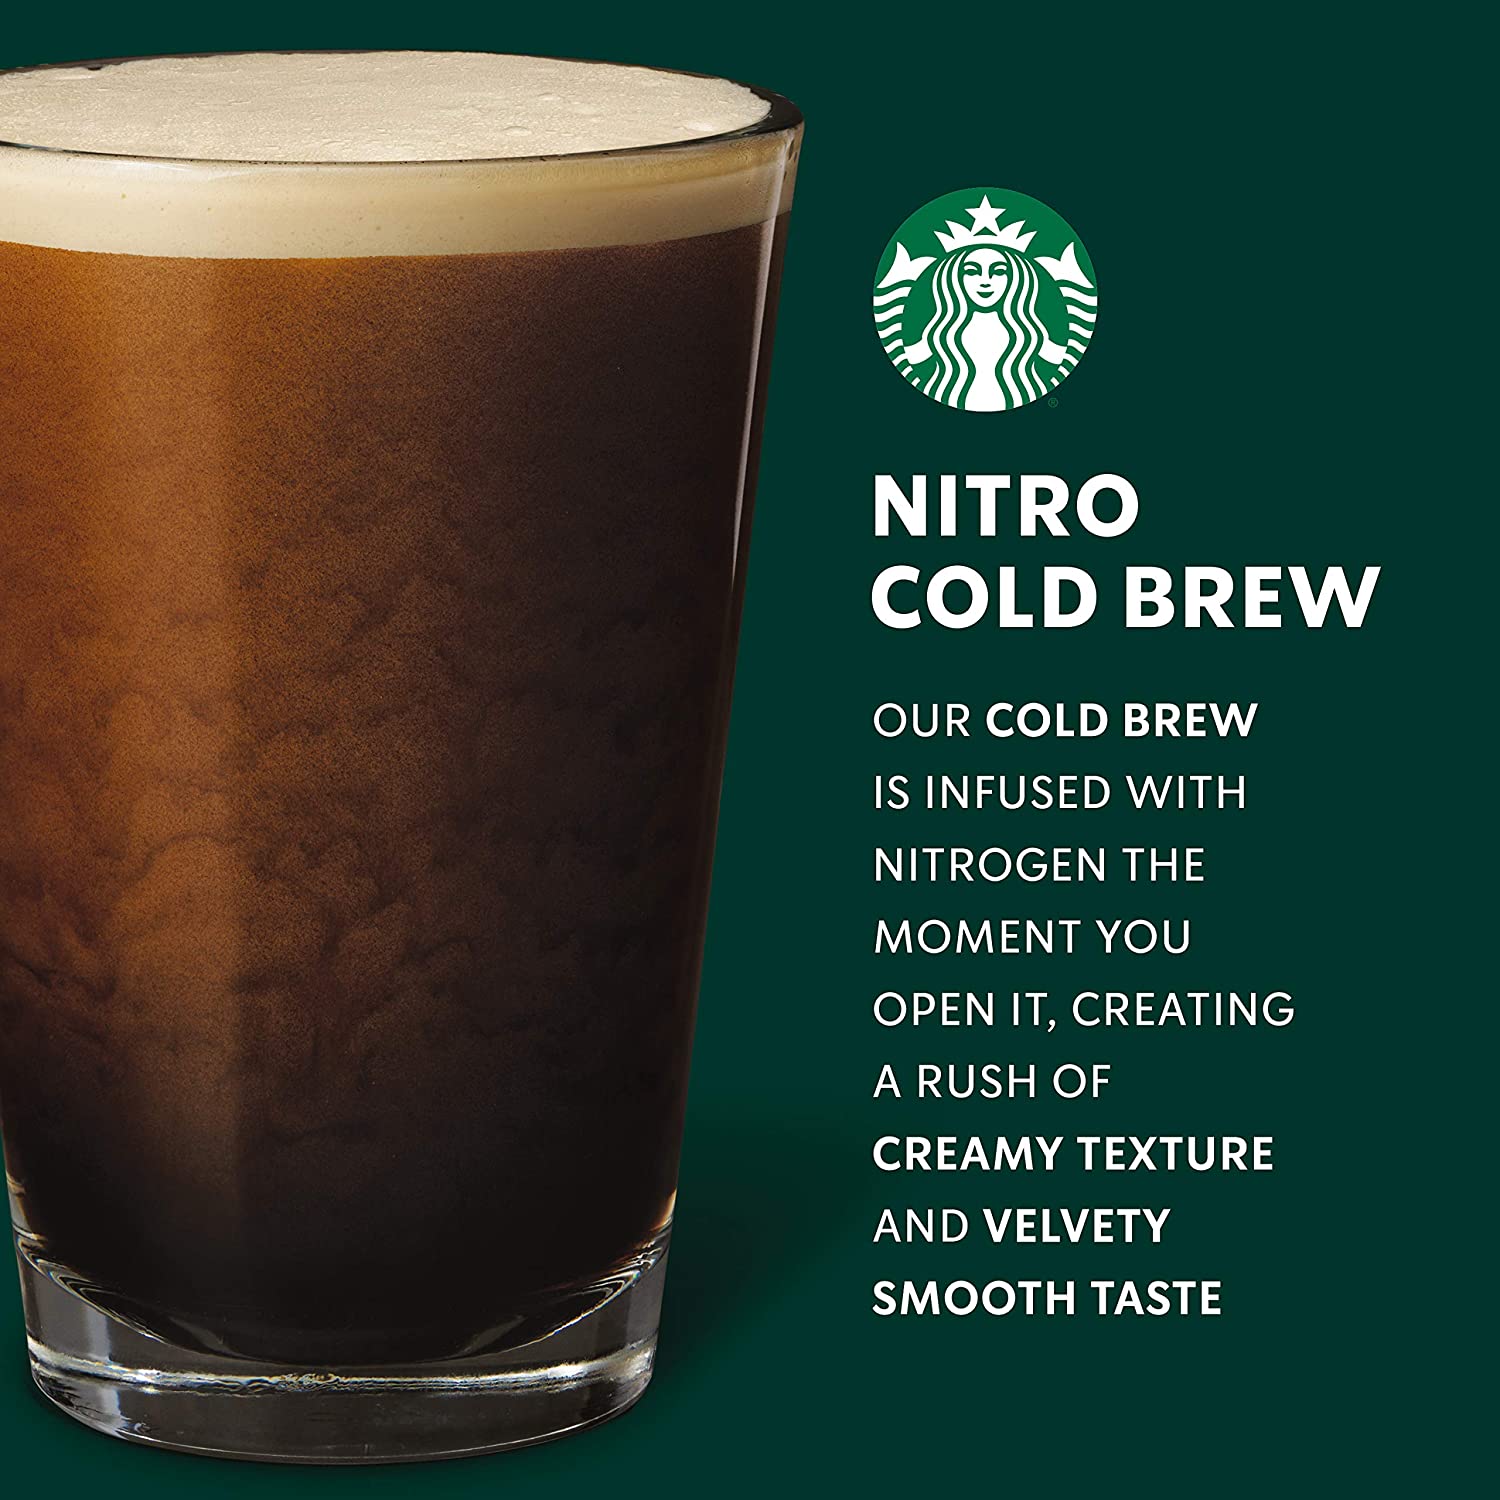 Starbucks Nitro Cold Brew Black Dark Caramel Premium Iced Coffee Drink, 9.6 oz 8 Pack Cans - image 3 of 7